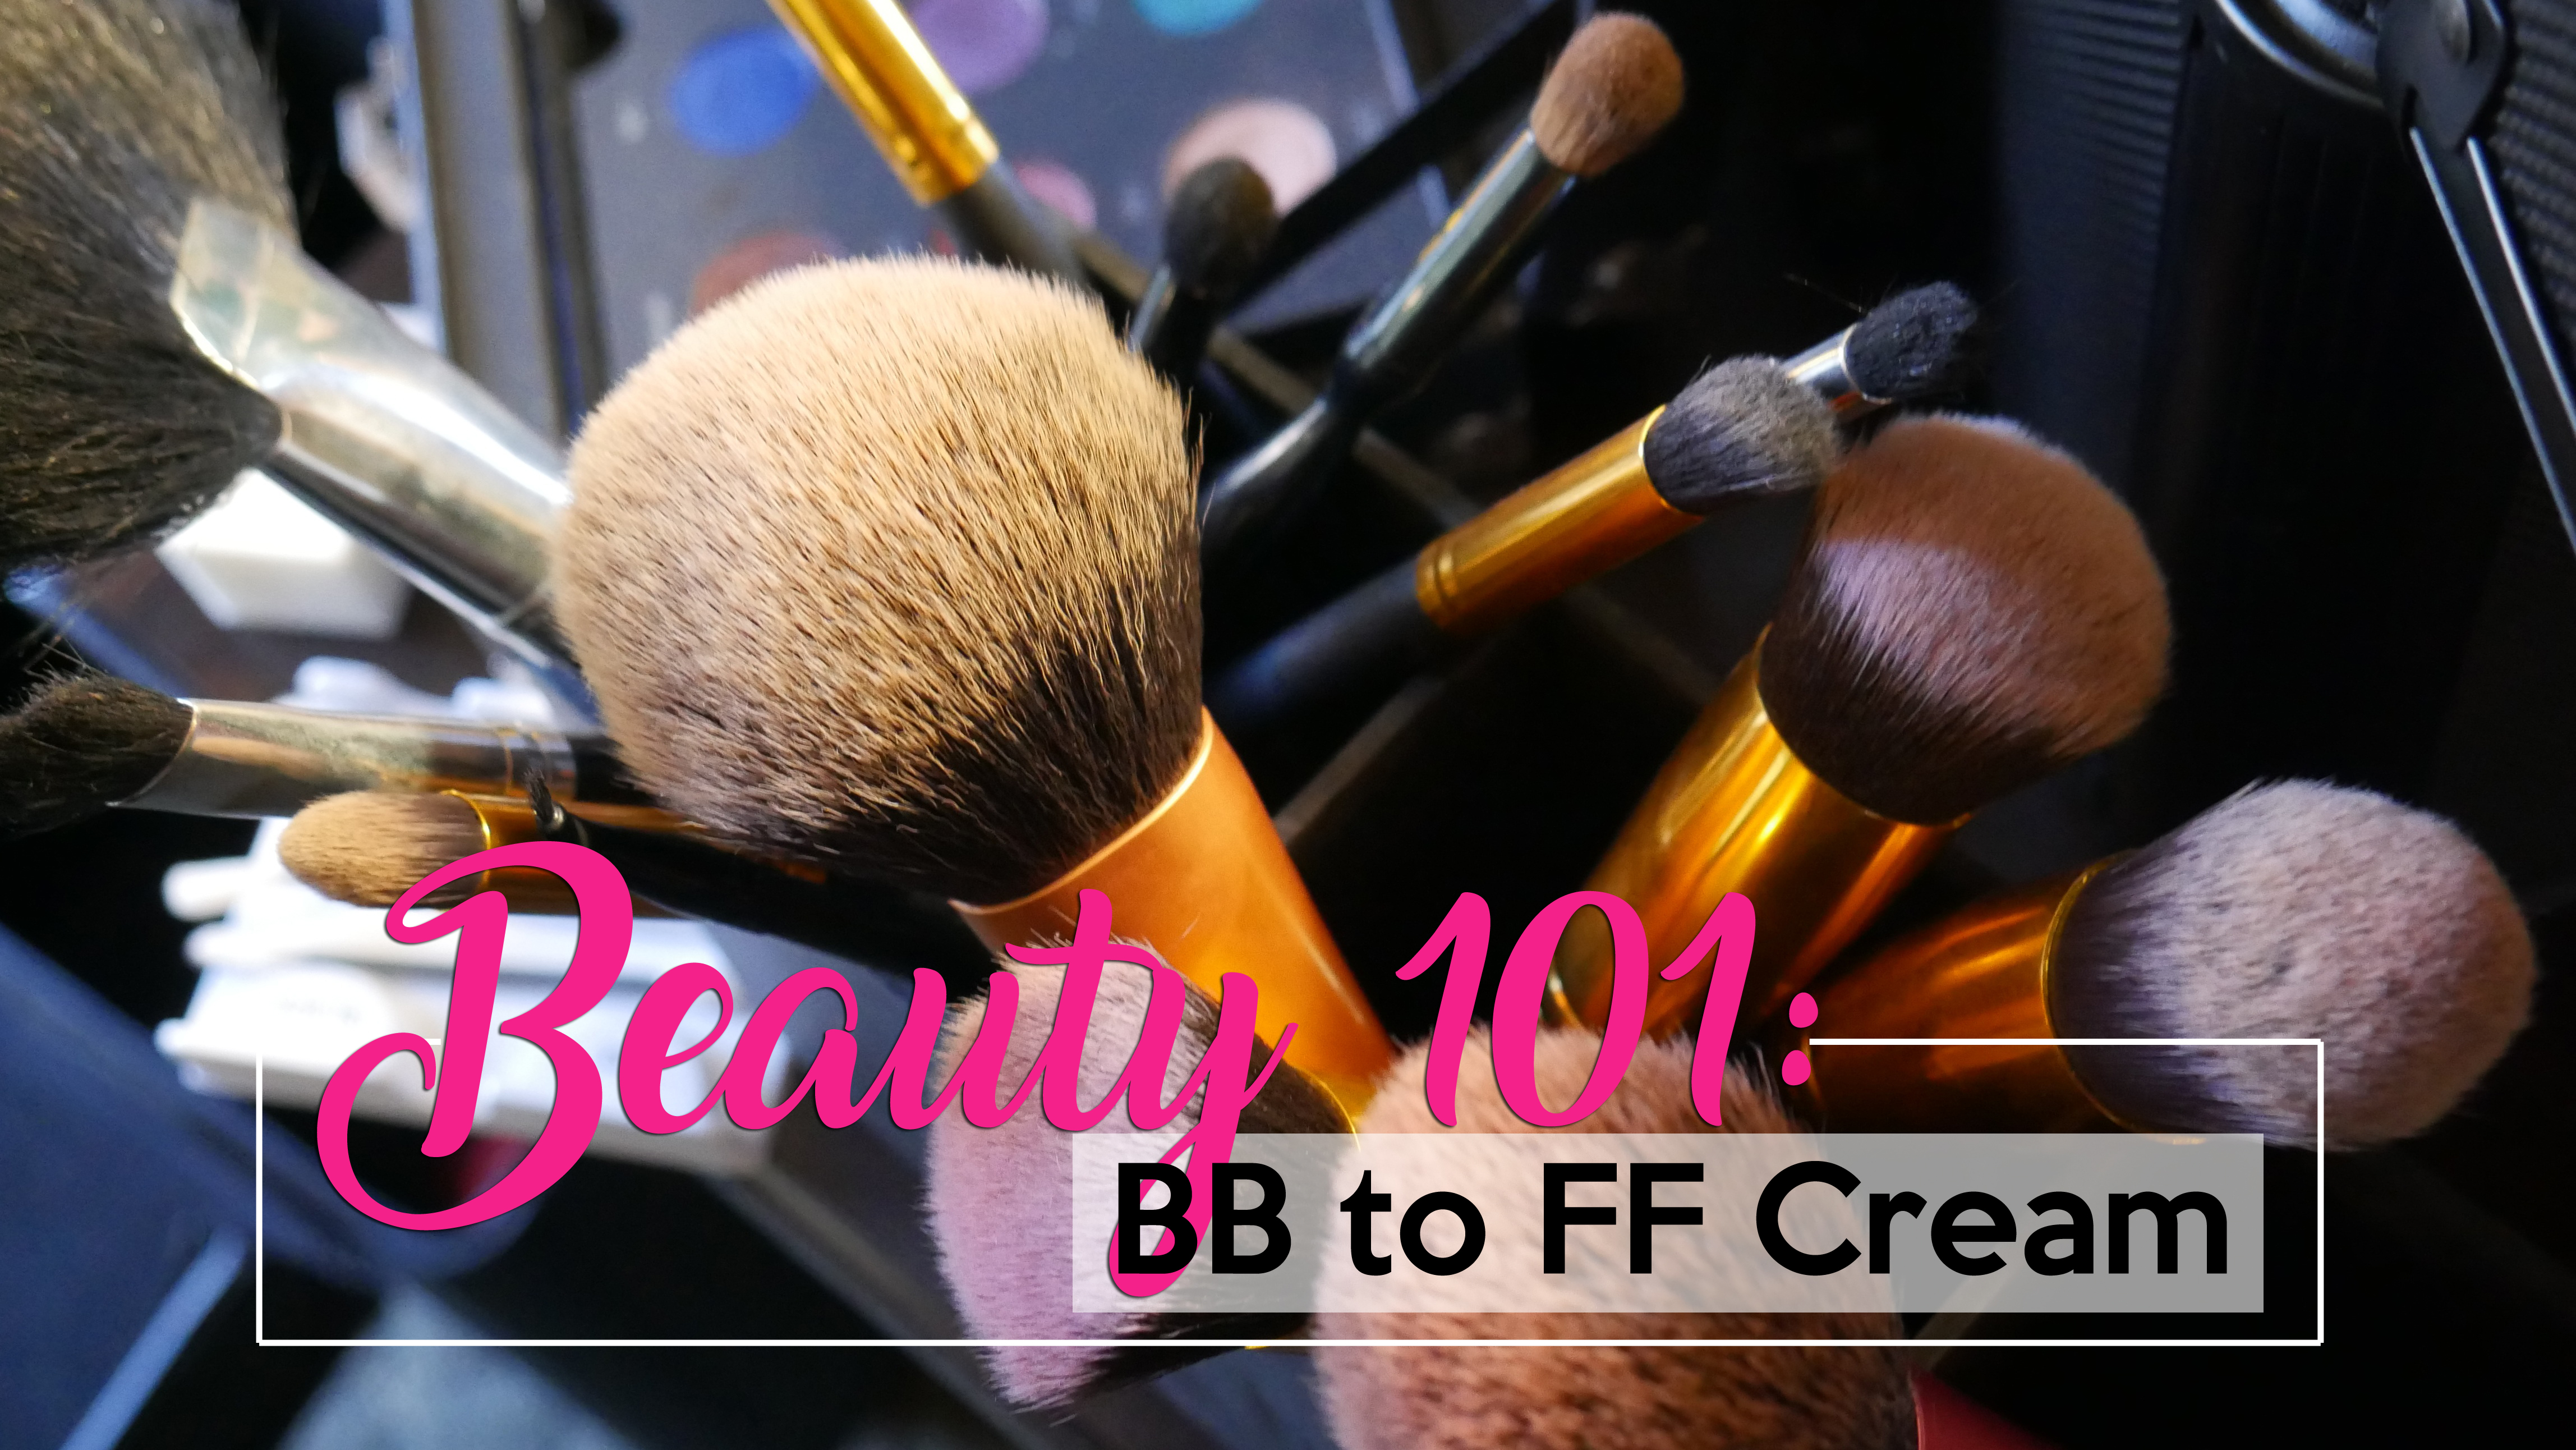 Beauty 101 BB to FF Creams